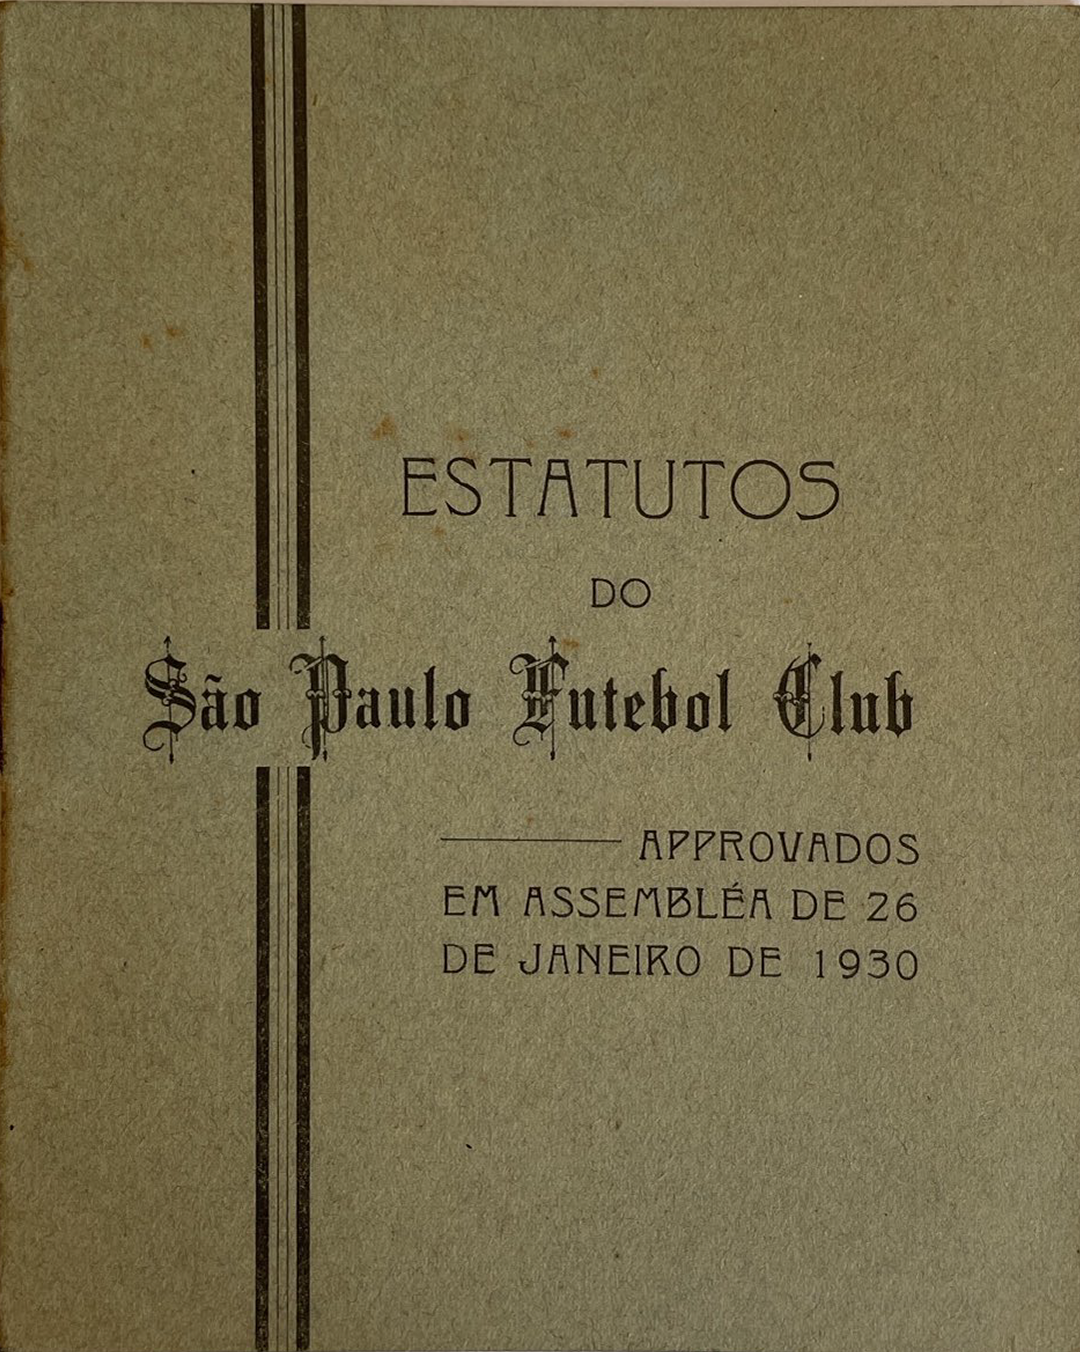 Clubes desportivos do Brasil: São Carlos Clube, São Paulo da Floresta,  Minas Tênis Clube, Guarani Esporte Clube, Club Athletico Paulistano